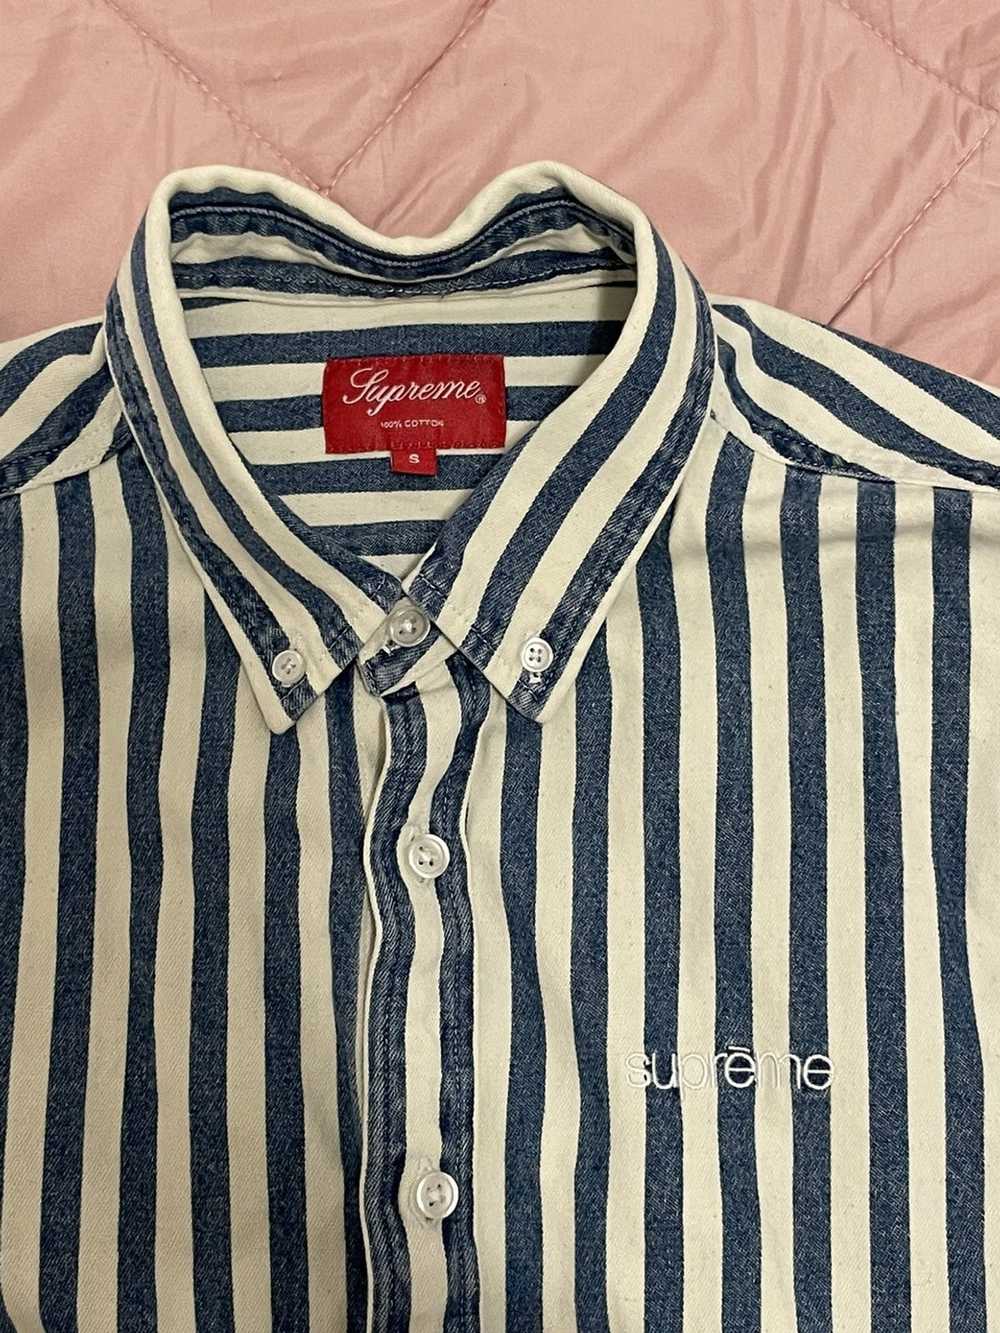 Supreme Supreme Stripped Button Up Shirt - image 3